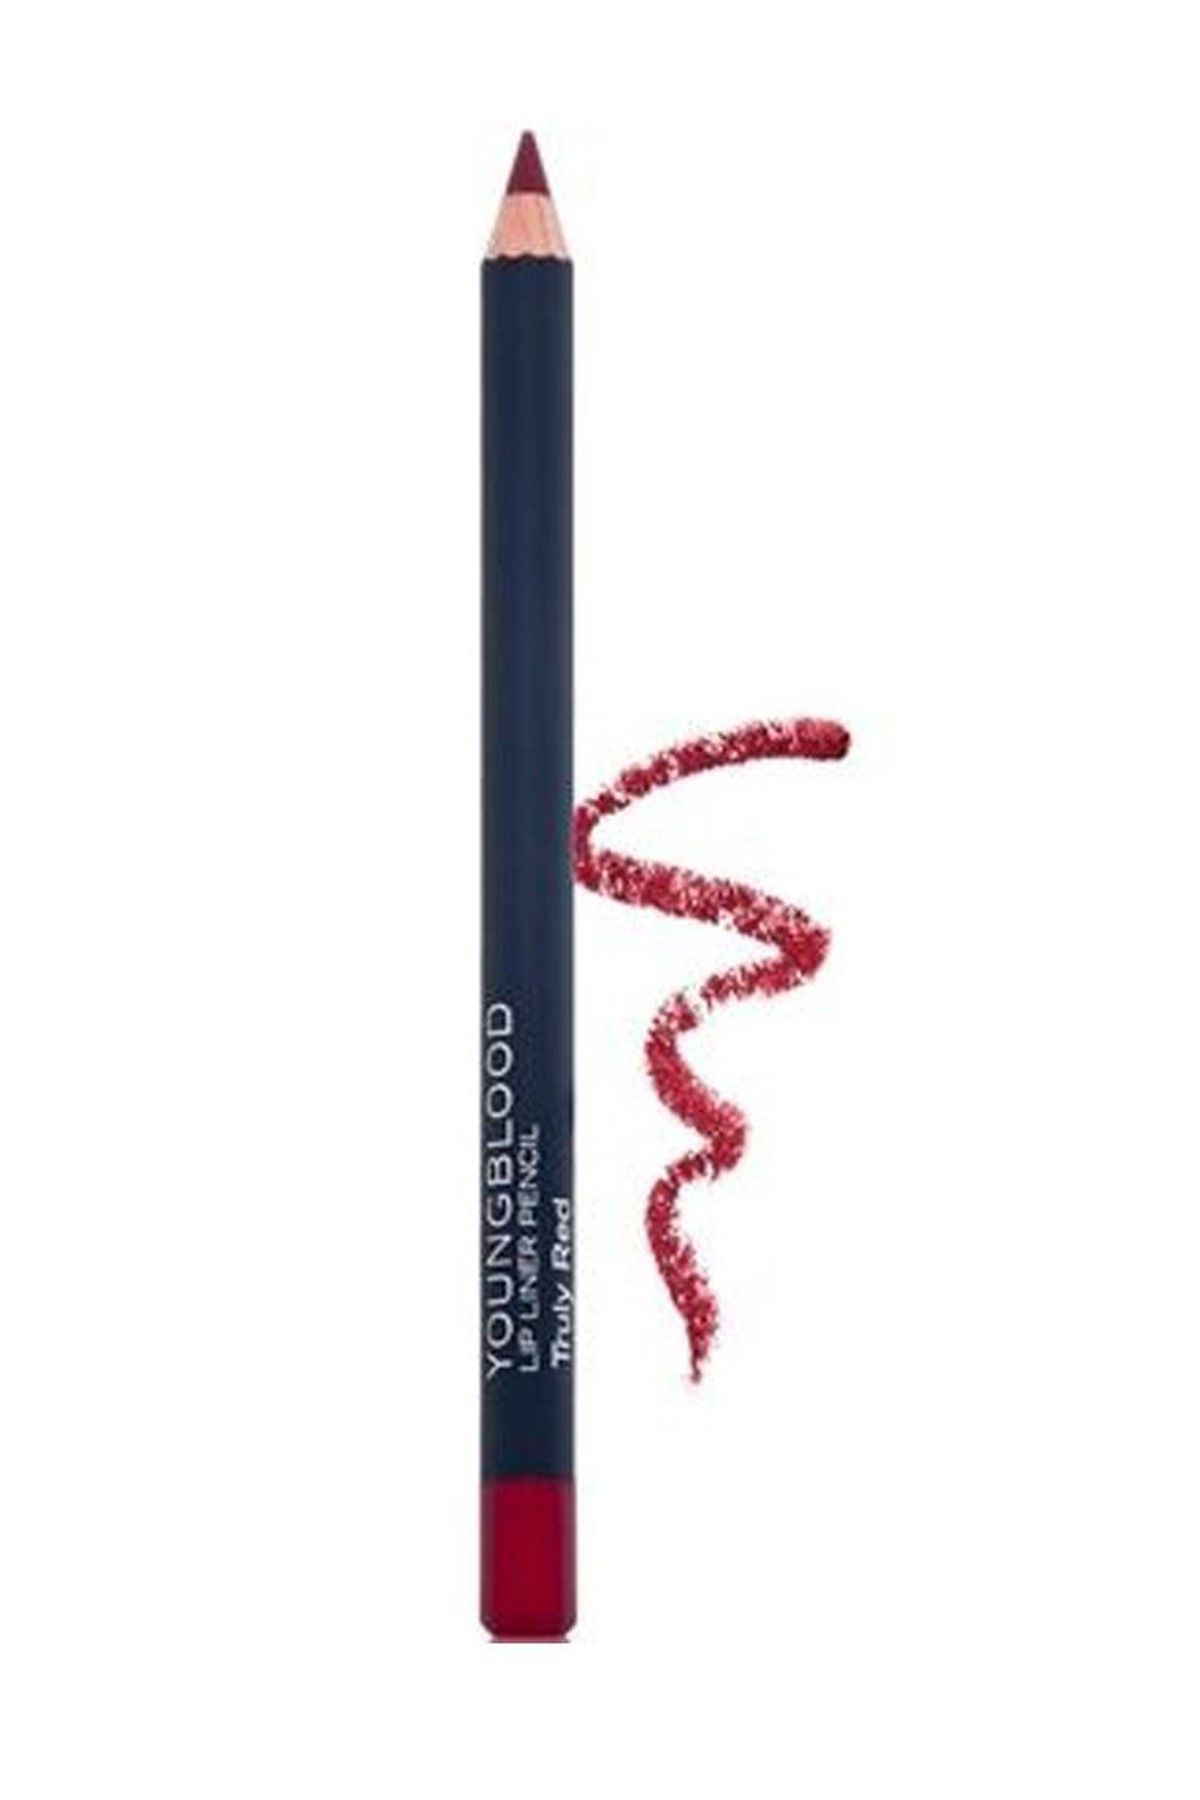 Youngblood Kırmızı Dudak Kalemi - Lip Liner Pencil Truly Red 696137130088